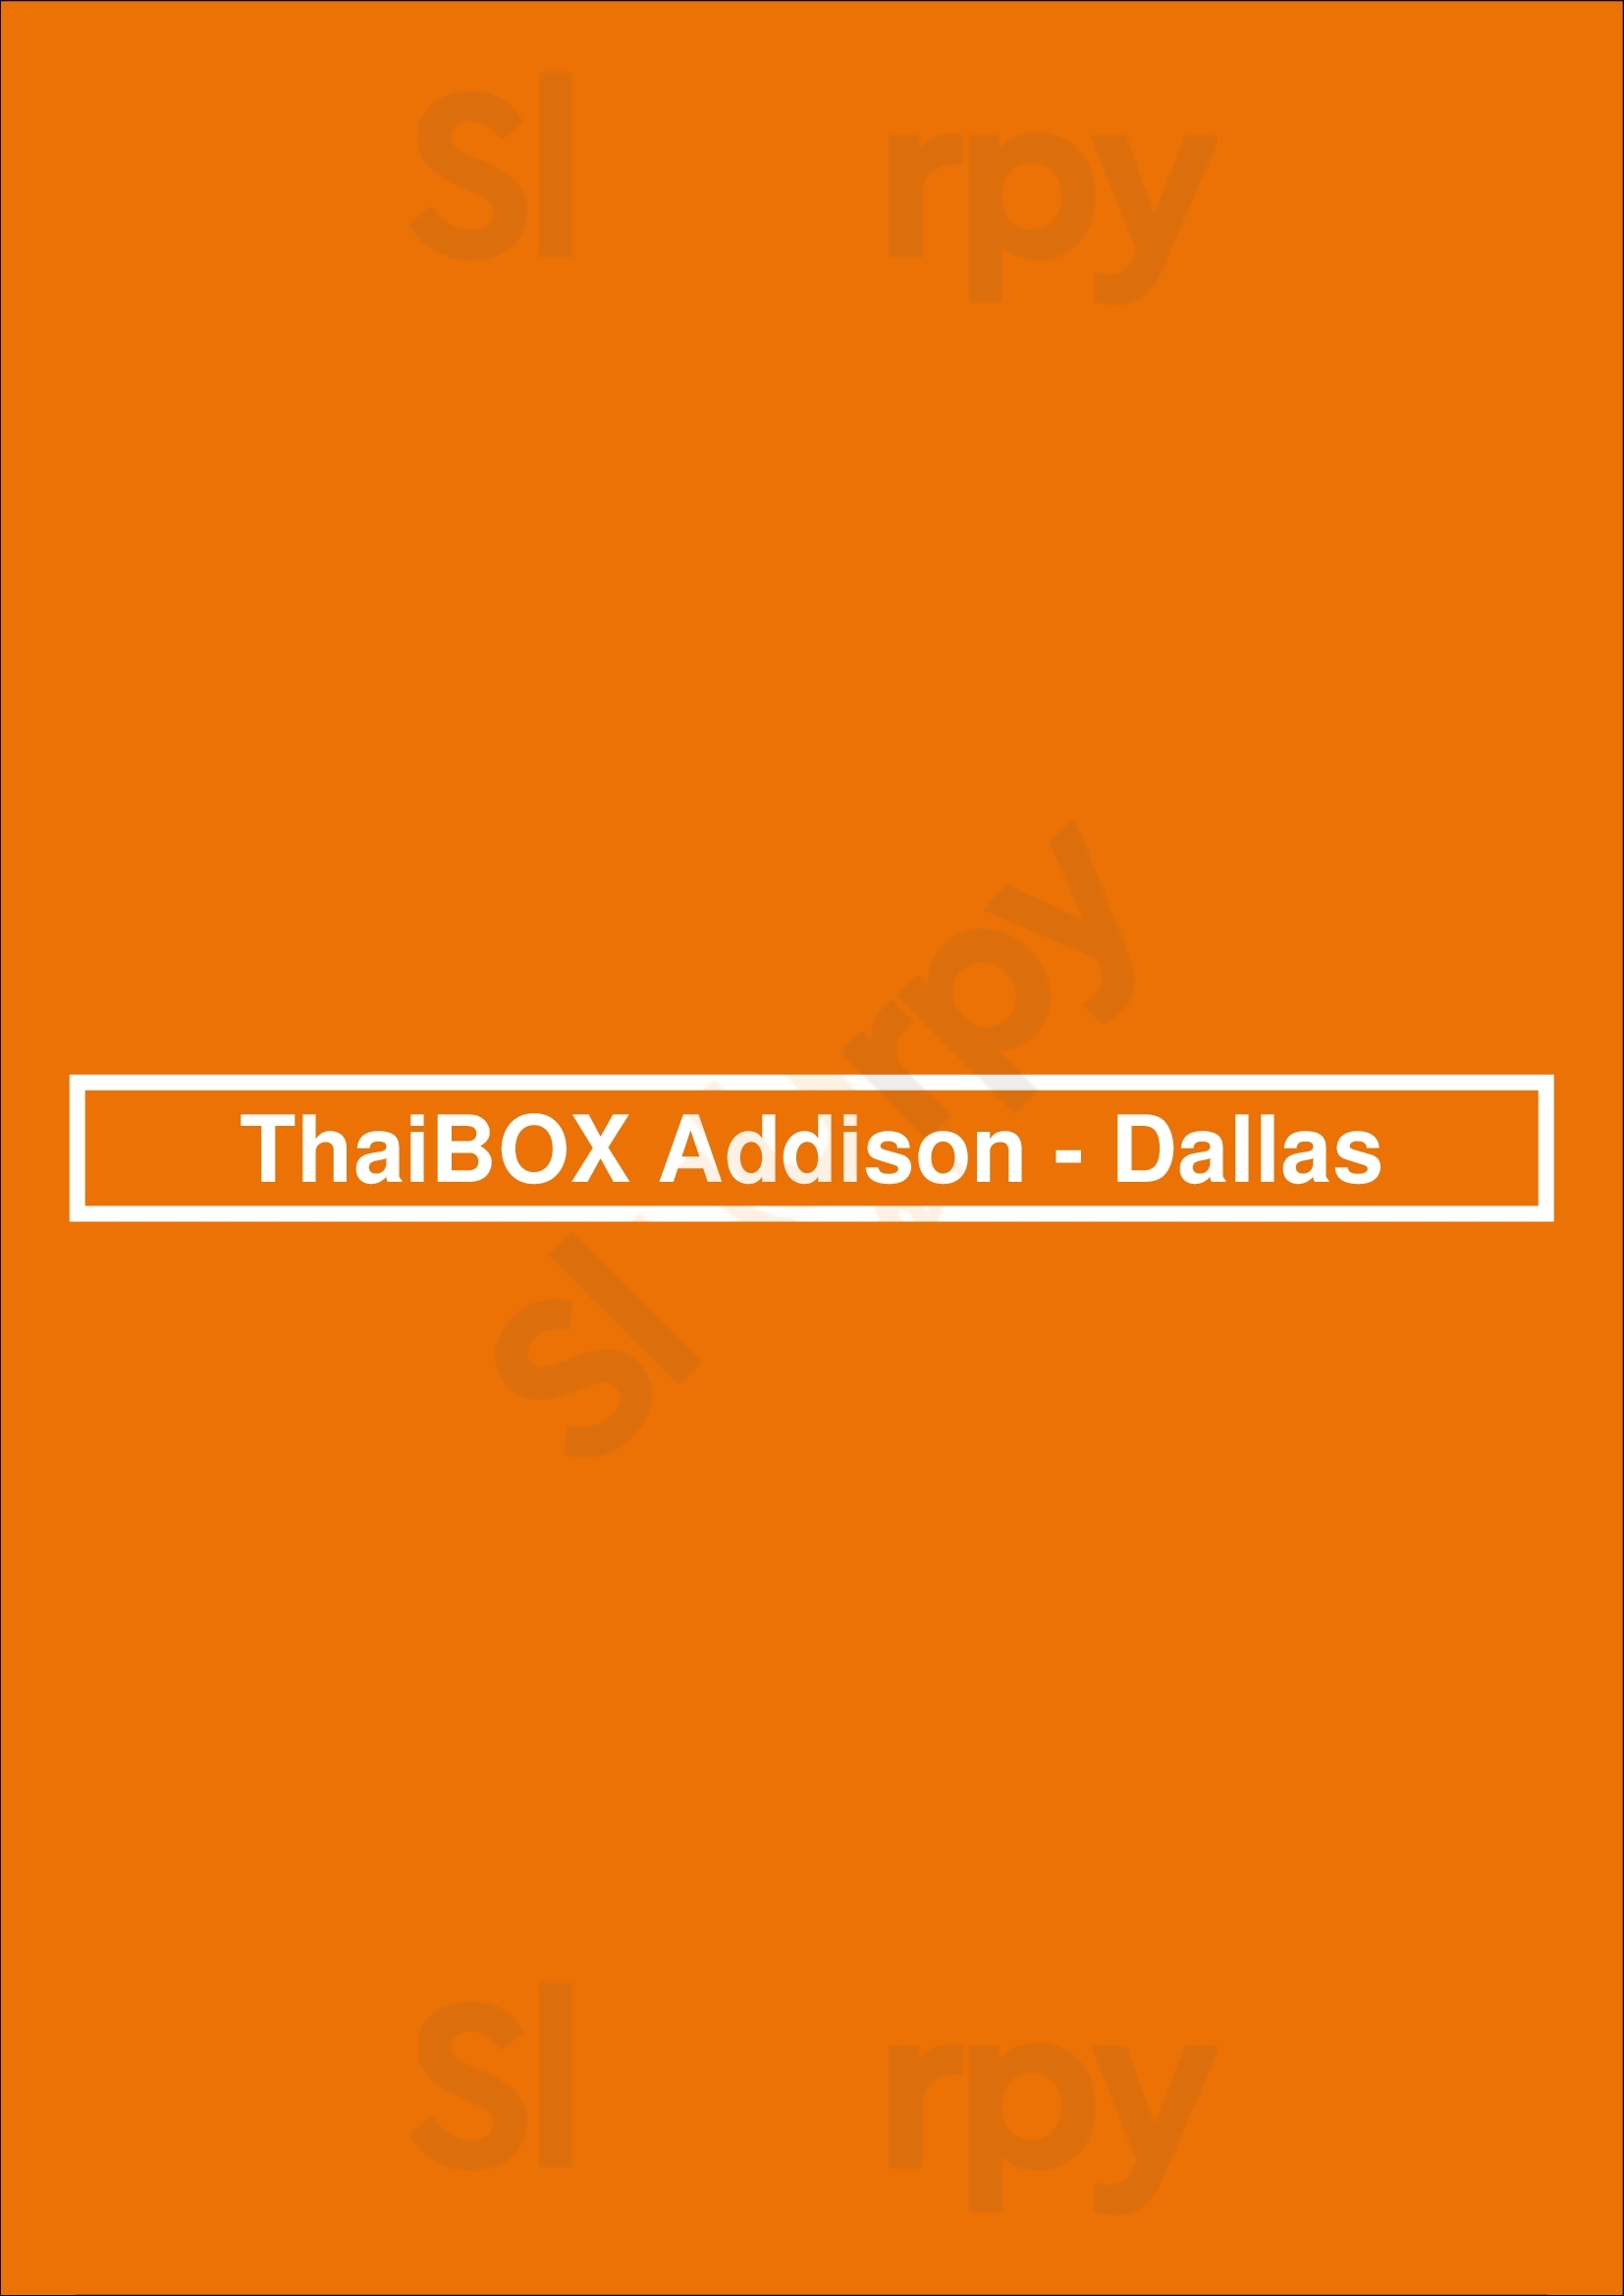 Thaibox Addison - Dallas Addison Menu - 1